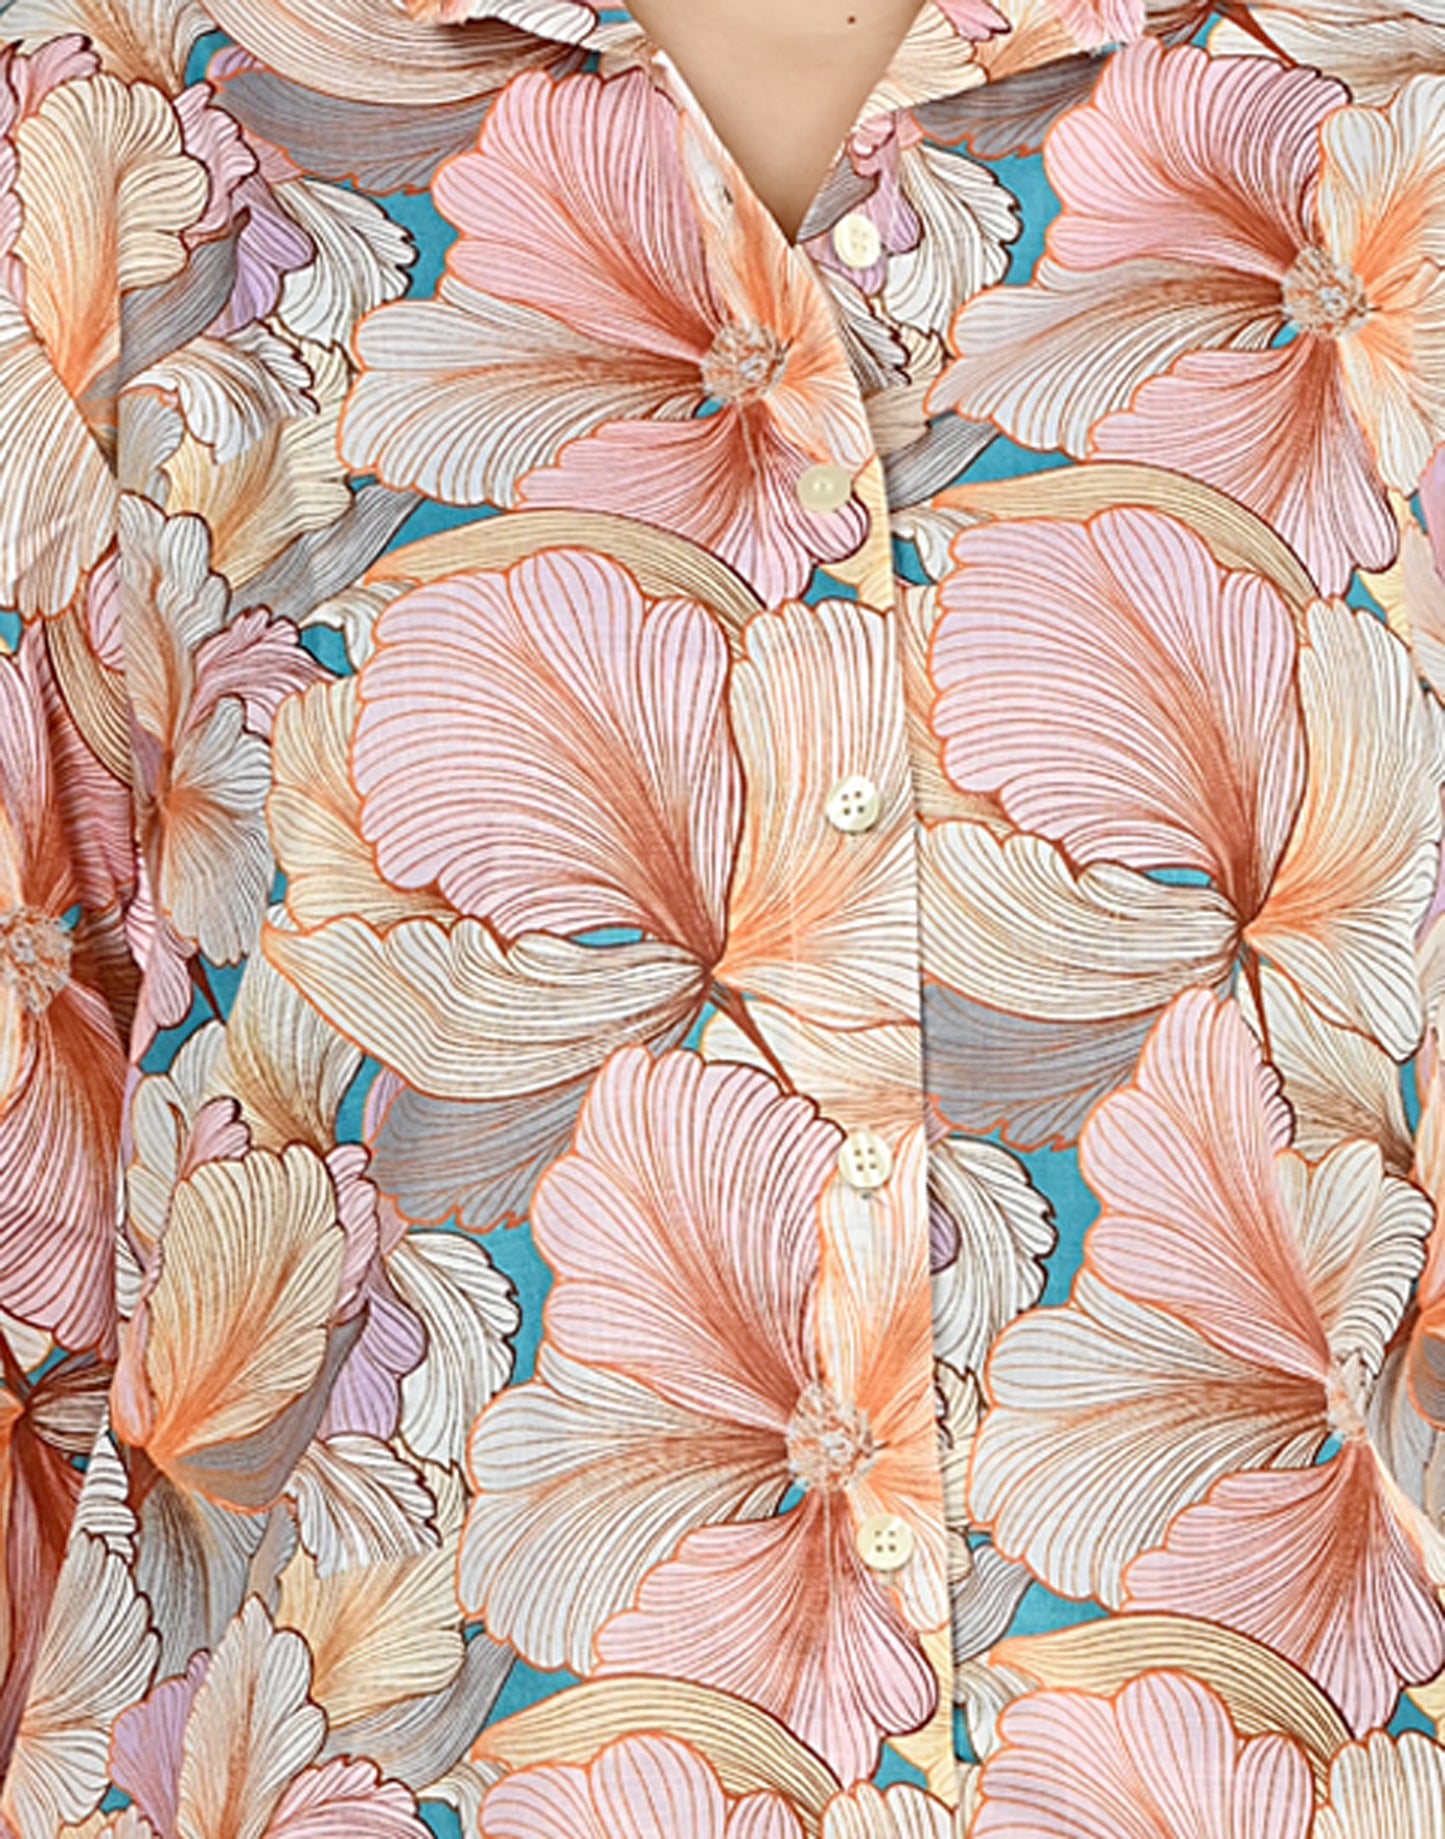 Women's Pyjamas Digital Flower Print Nightwear/CordSet Set | Riwaz Trendz